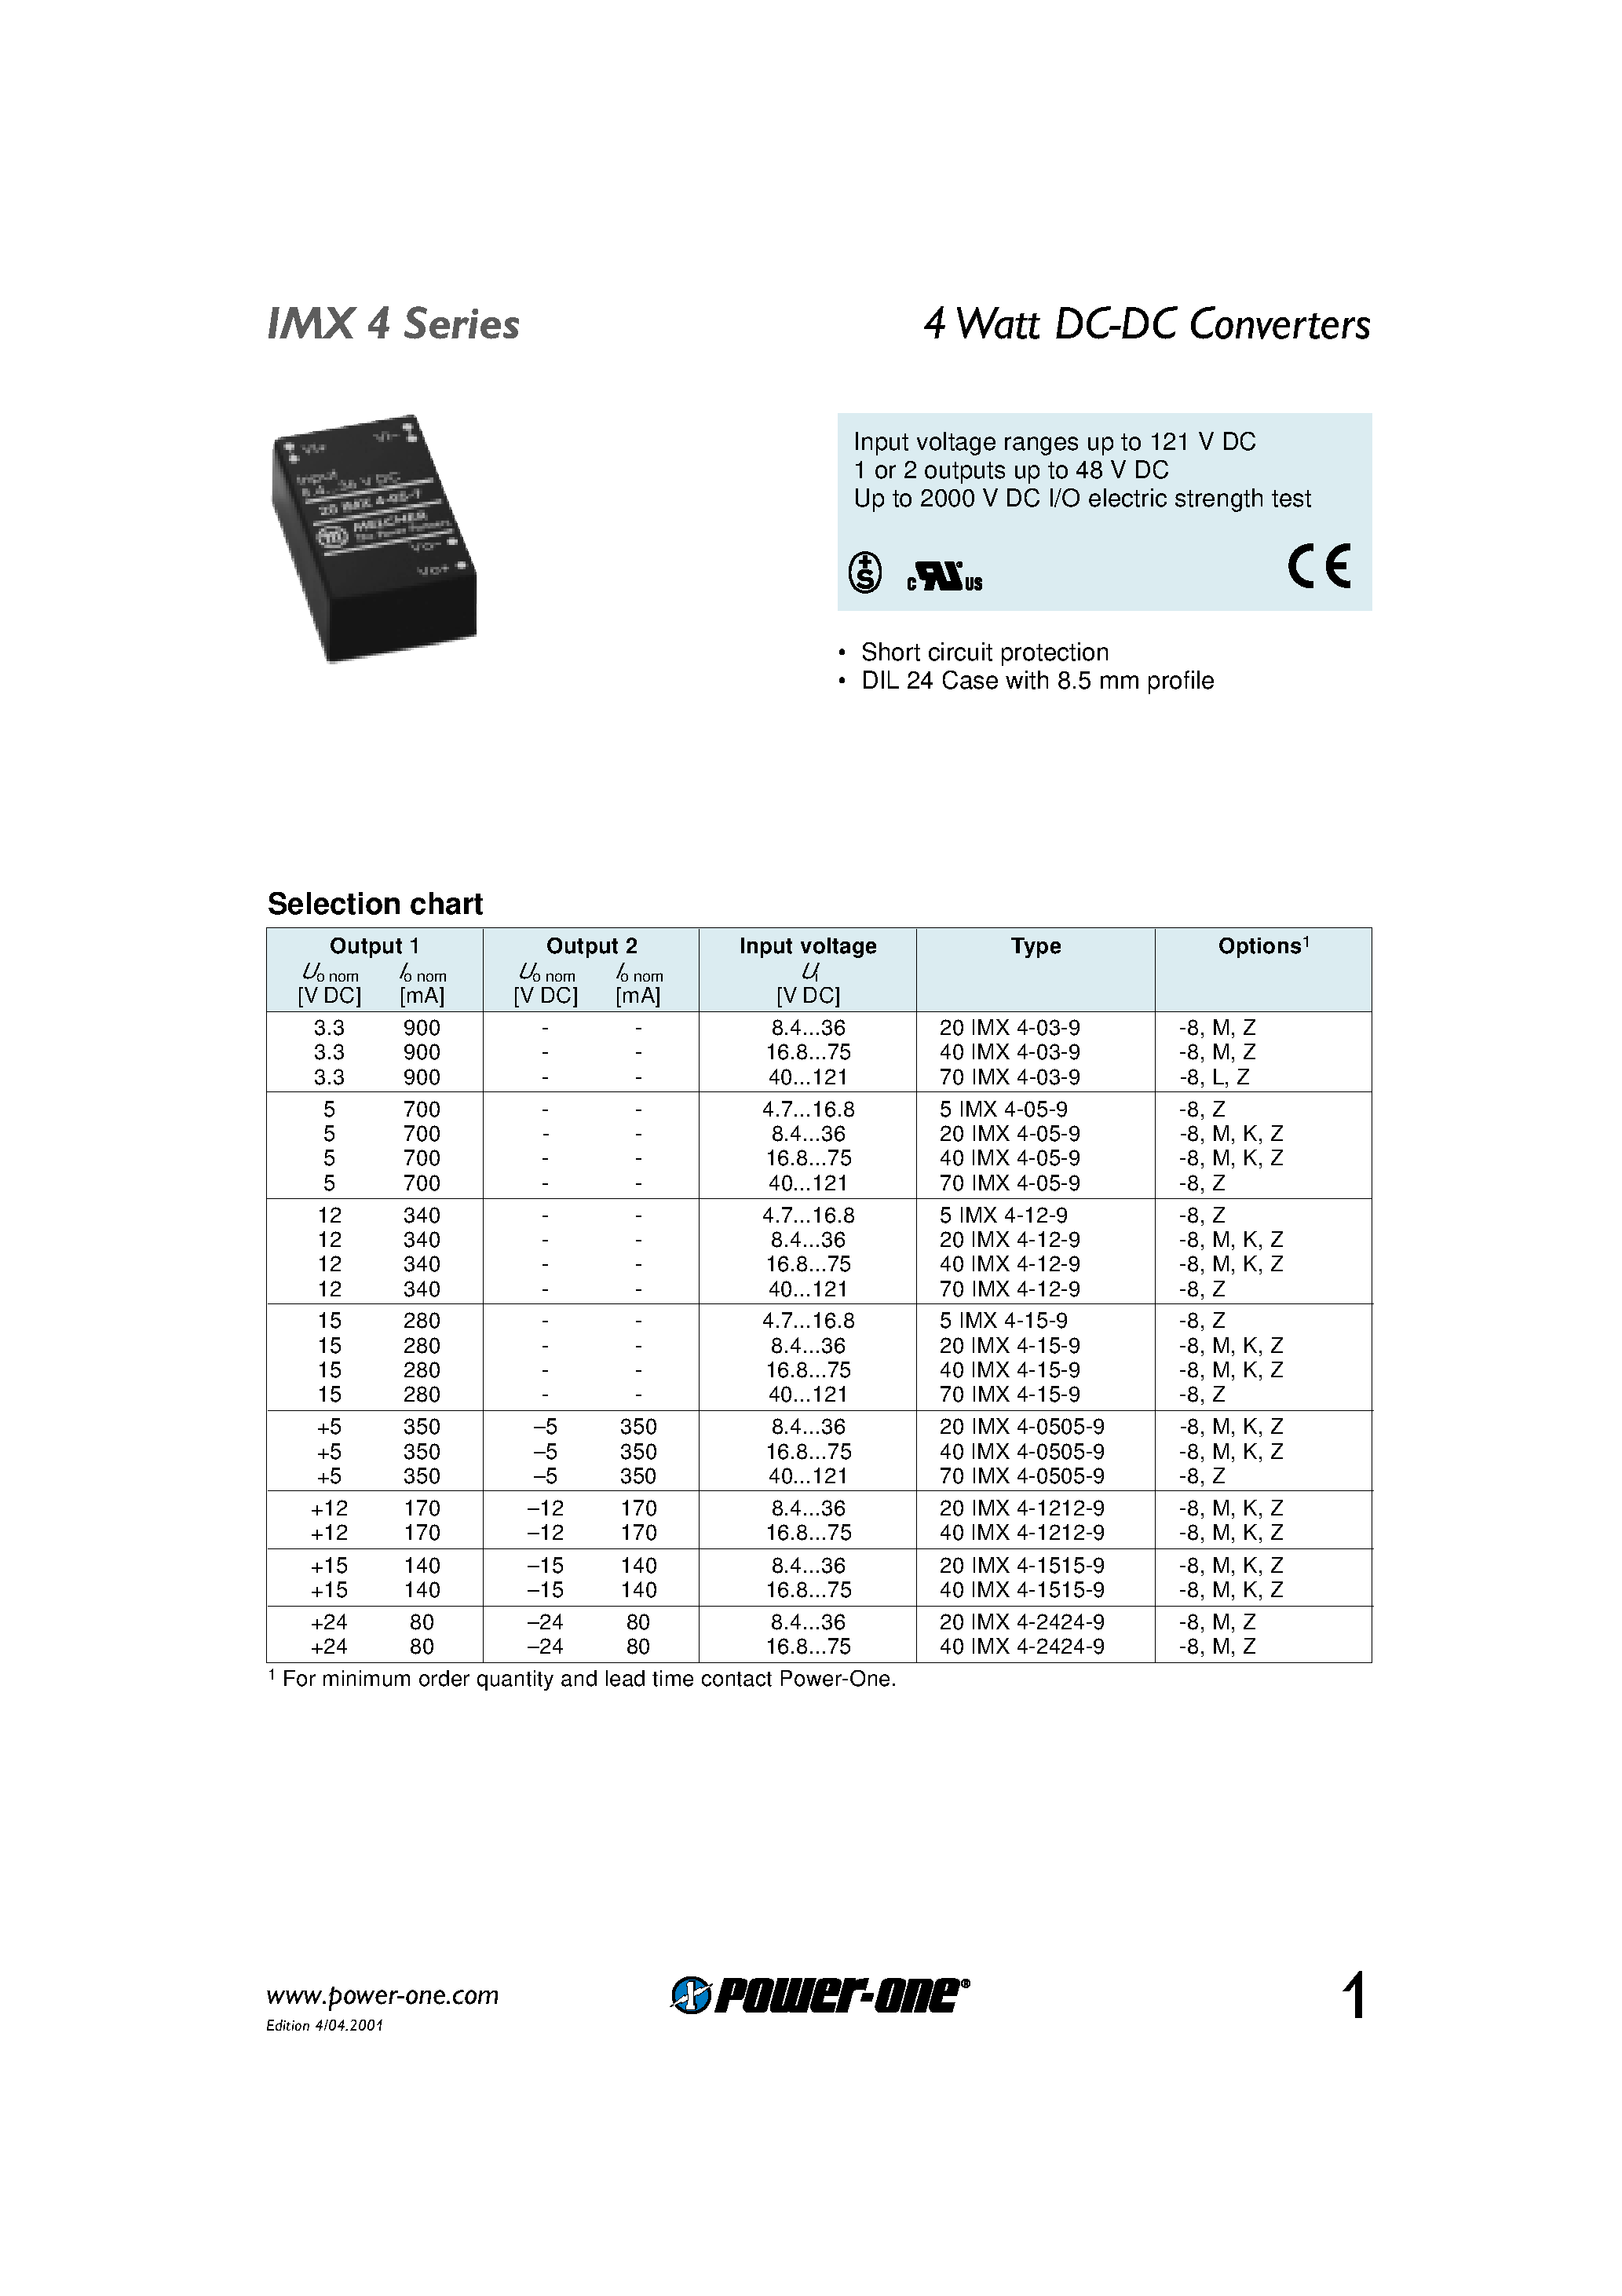 Даташит 5IMX4-15-9 - 4 Watt DC-DC Converters страница 1